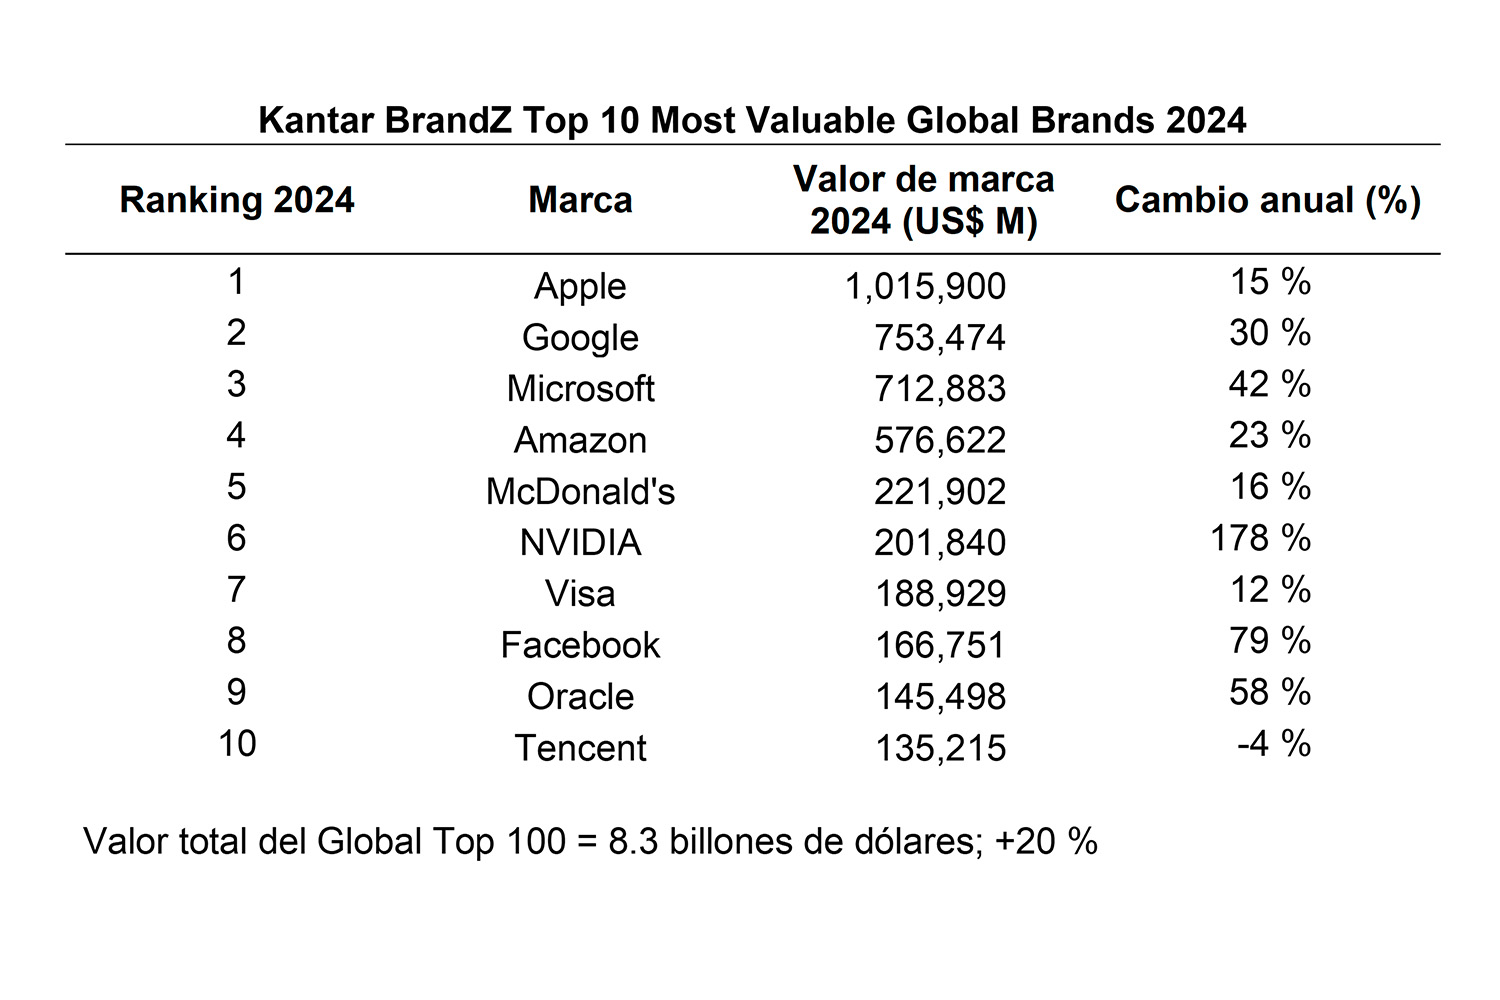 Marcas del Top 10 ranking Kantar BrandZ Global 2024